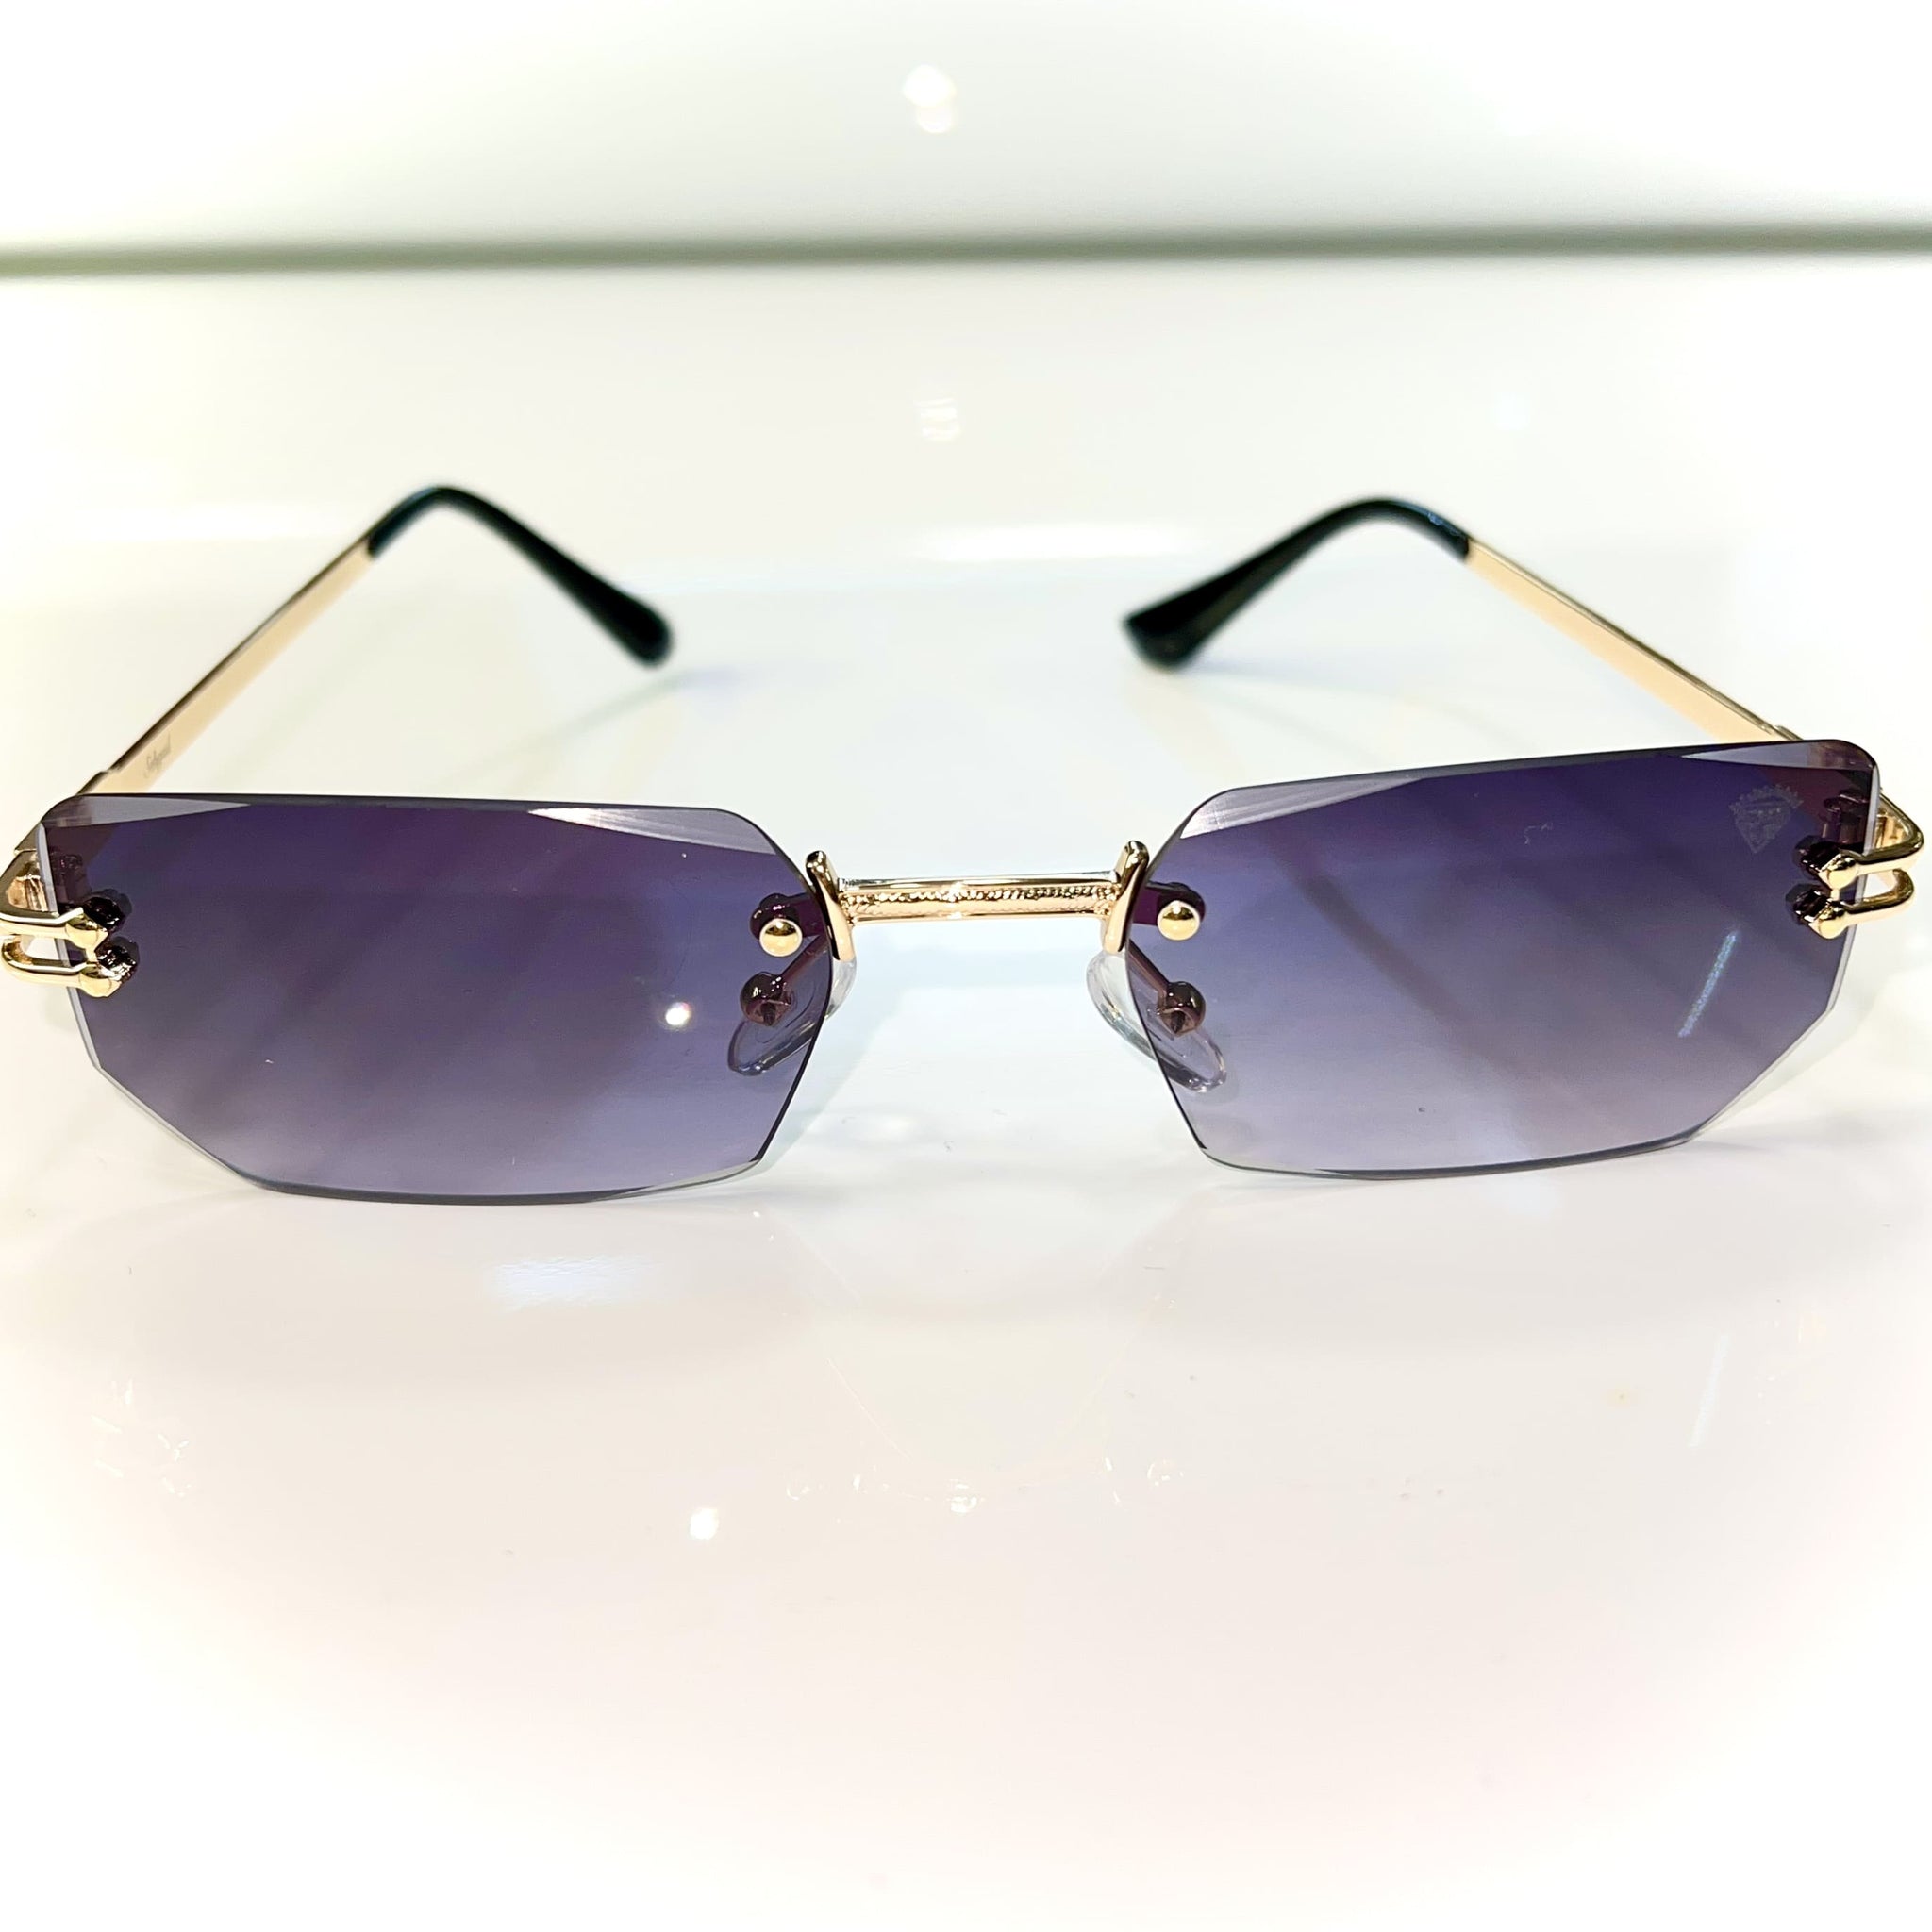 Rich Glasses - Diamond Cut - 14k gold plated - Black Shade - Sehgal Glasses